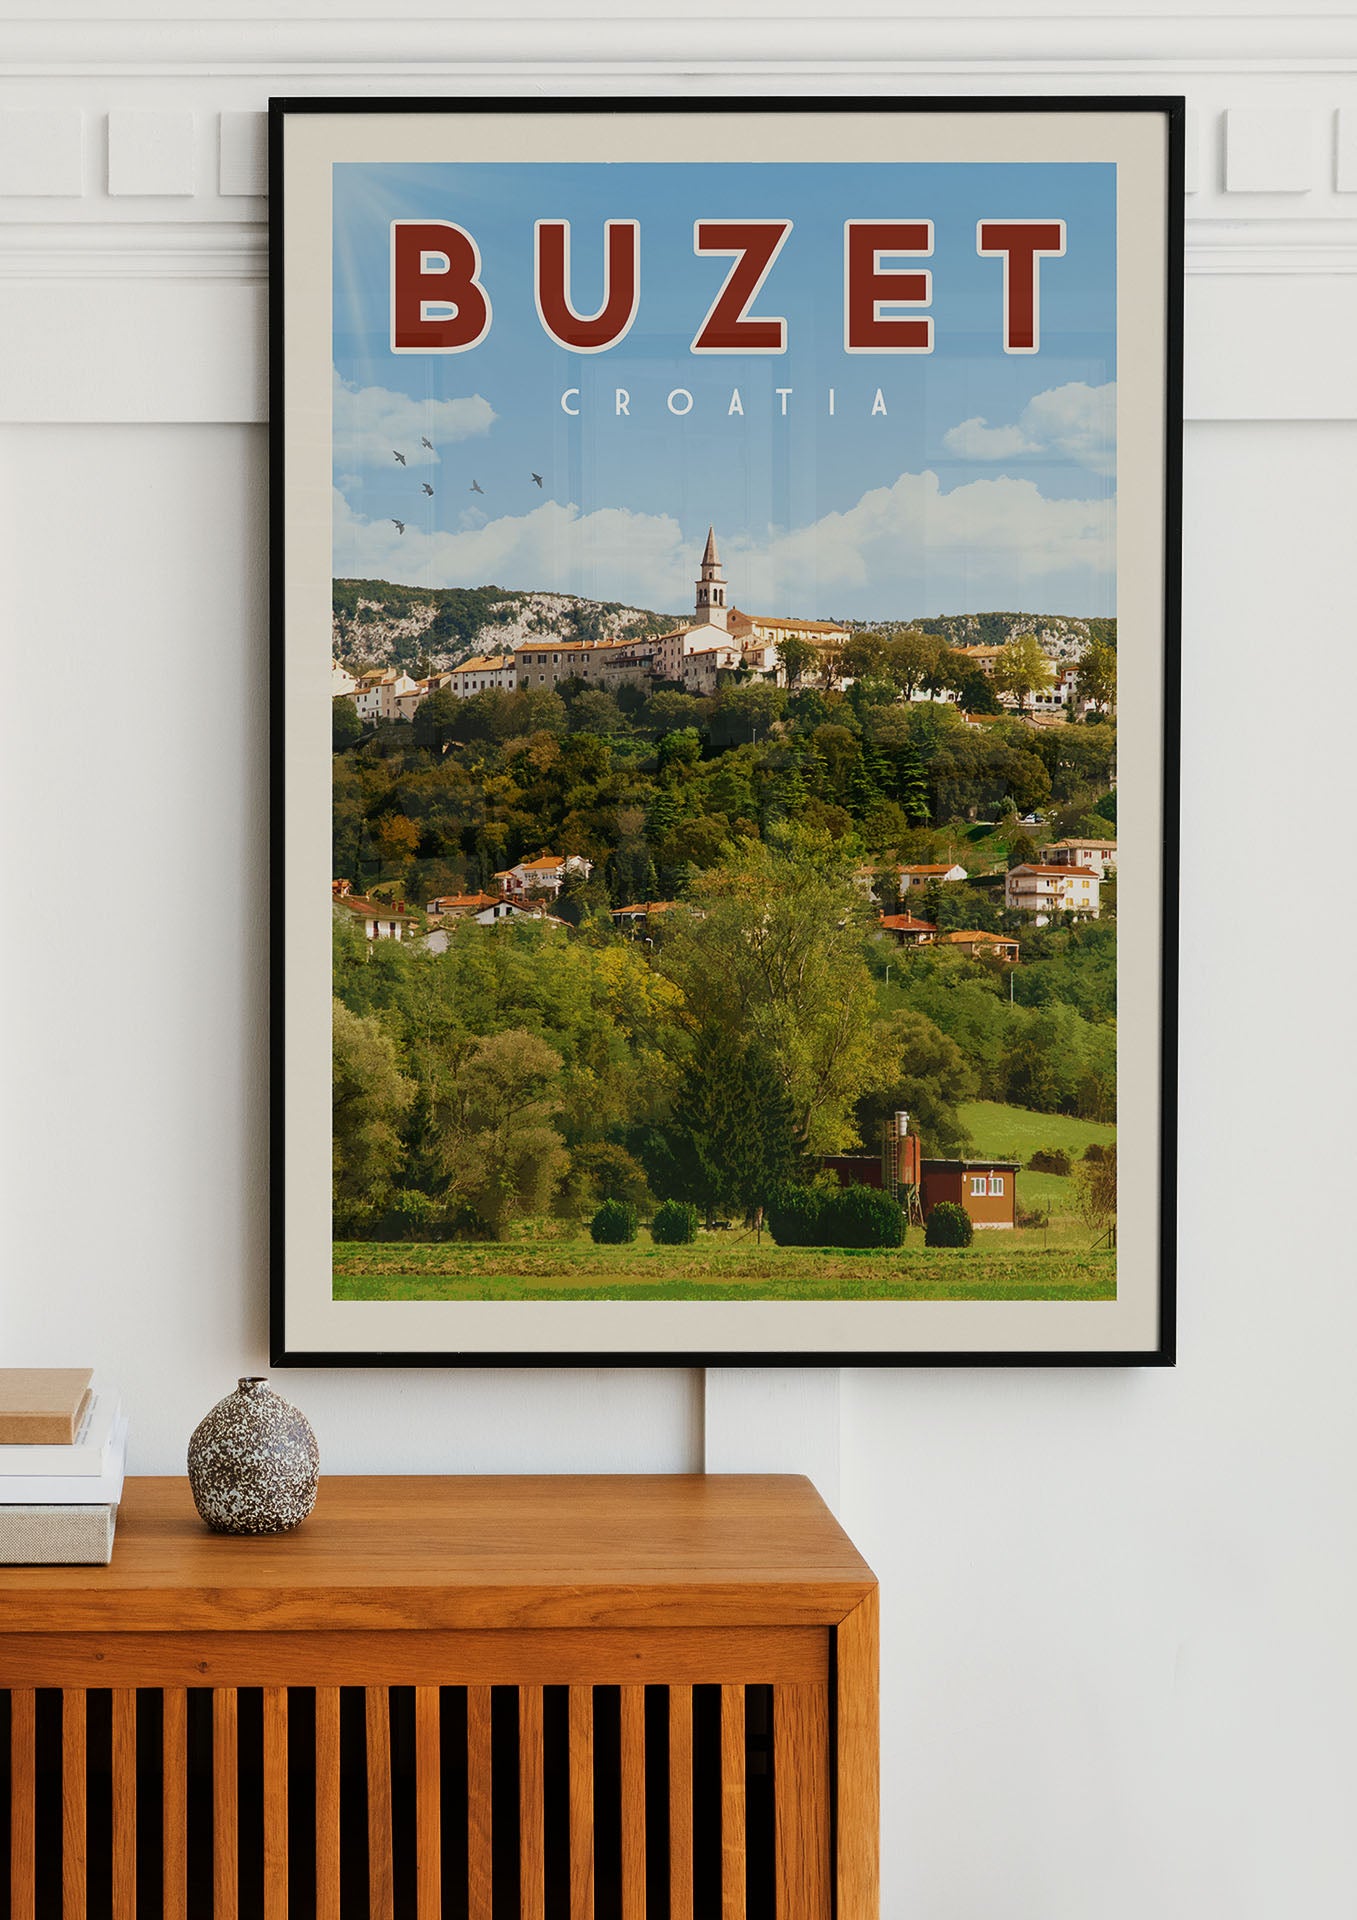 Buzet, Croatia - Vintage Travel Poster